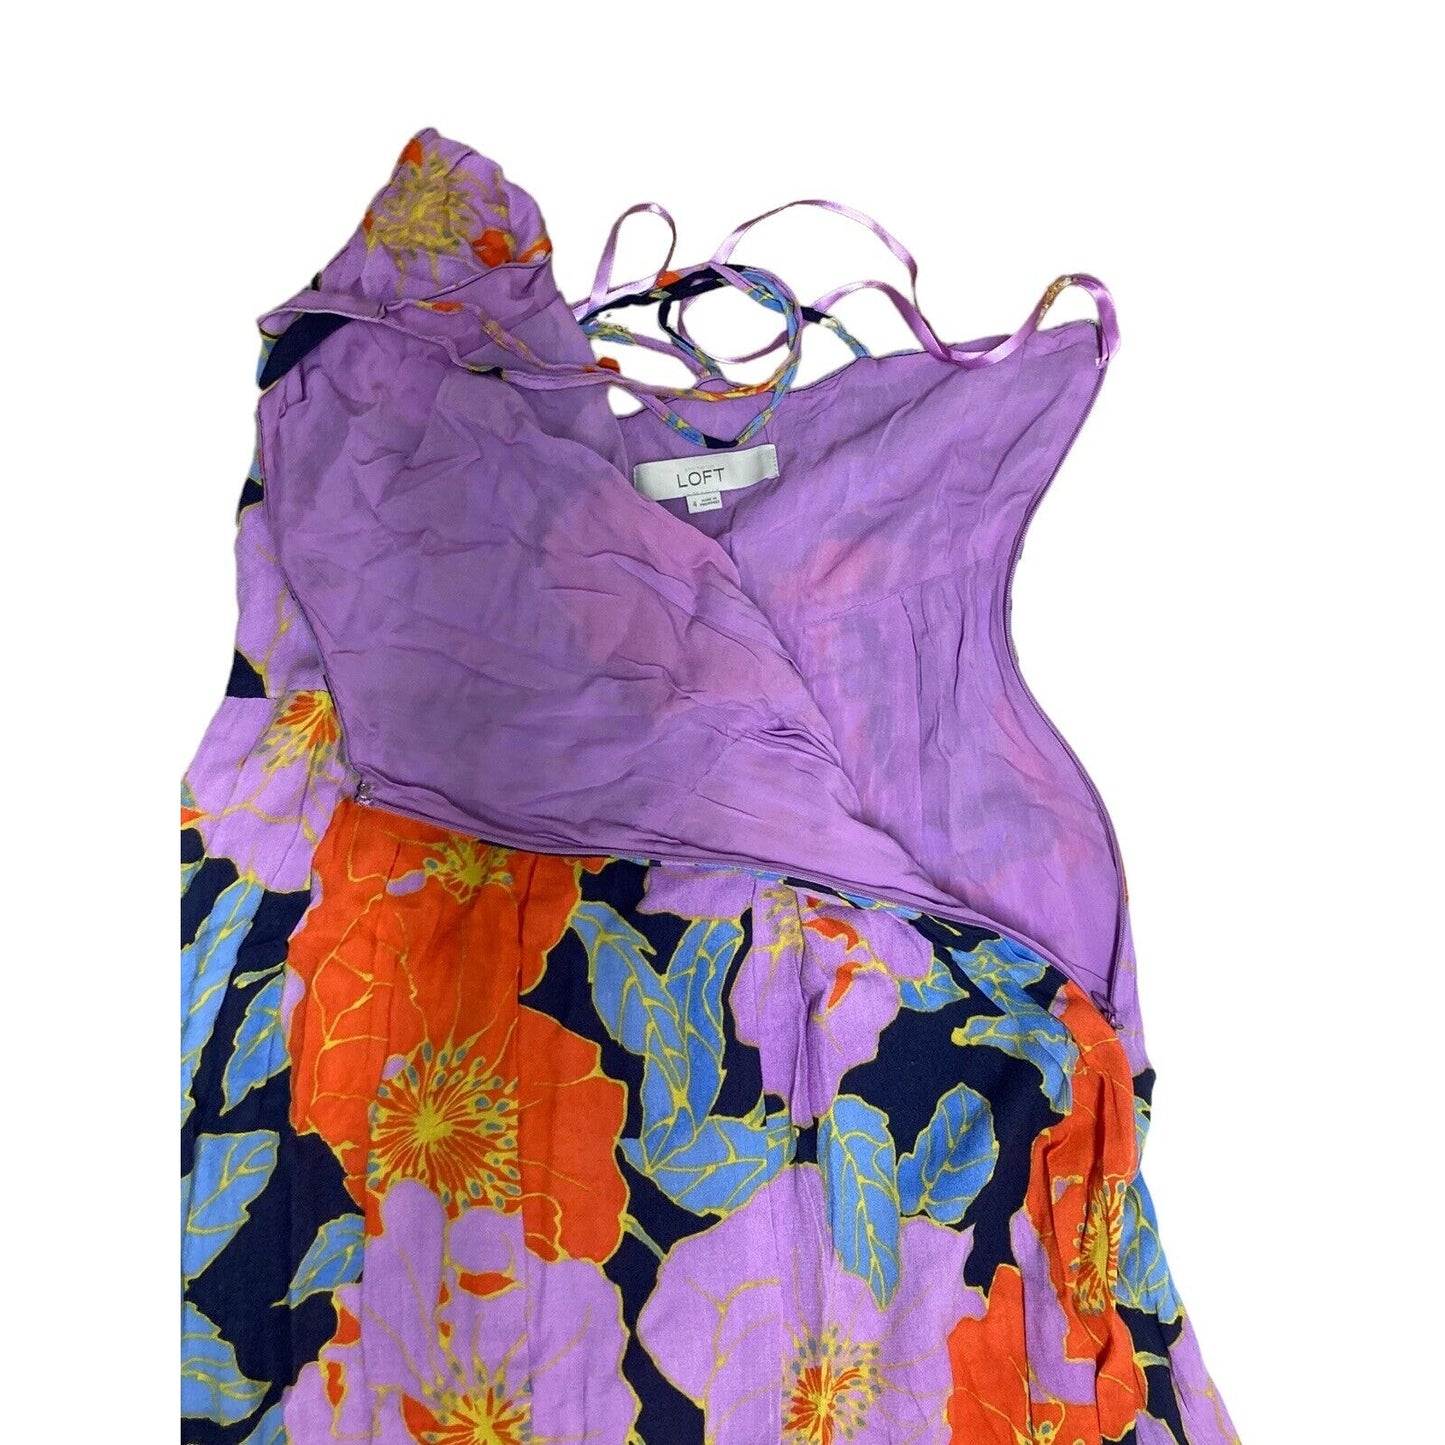 Ann Taylor LOFT Full Bloom Floral Sleeveless Maxi Dress Size 4 Cross Cross Strap